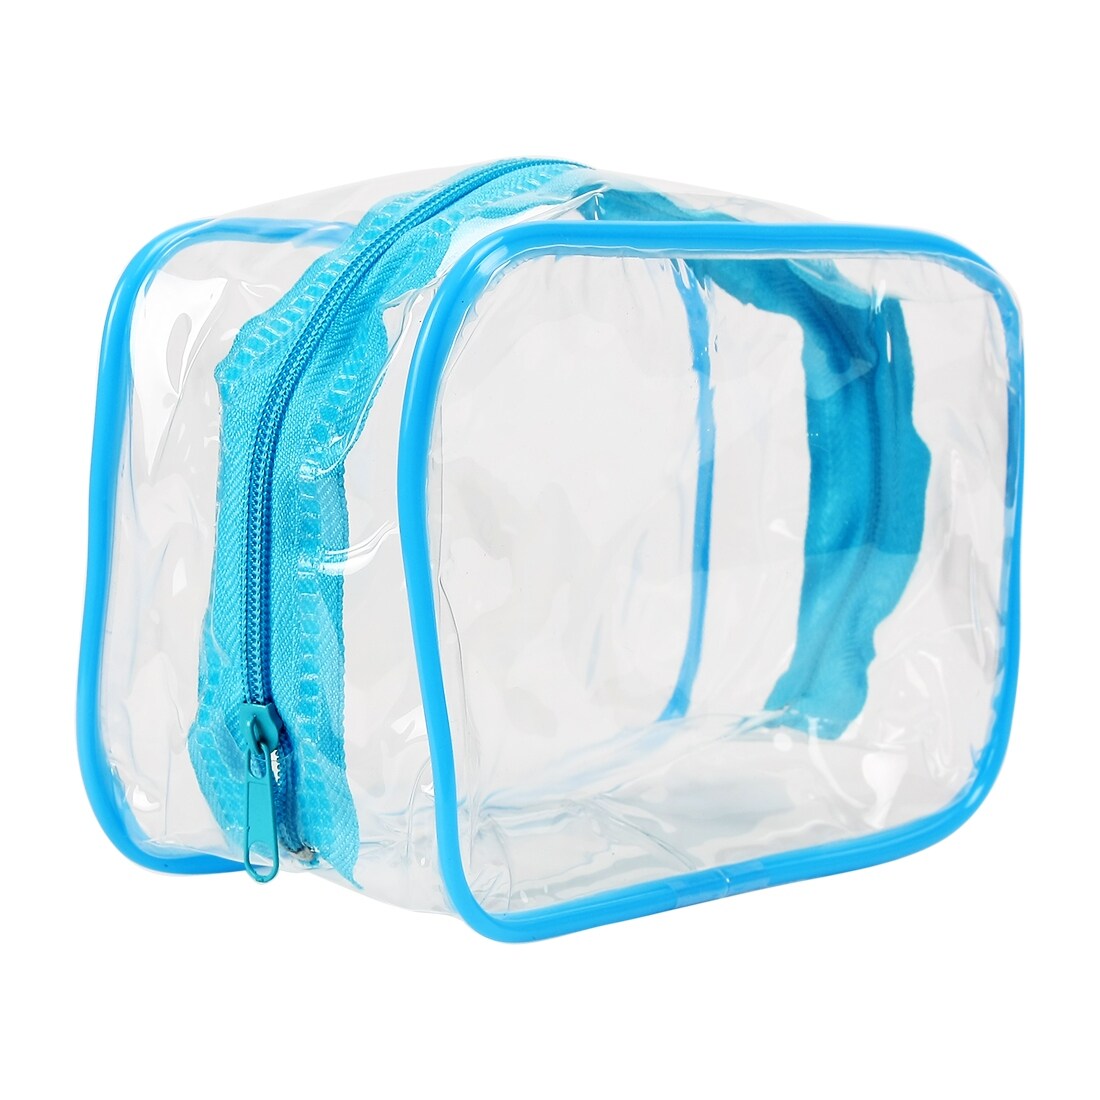 PVC Cosmetic Makeup Toiletry Clear Travel Bath Wash Bag Holder Pouch - 6 x  3.9 x 2.4(L*W*H) - Bed Bath & Beyond - 34012667